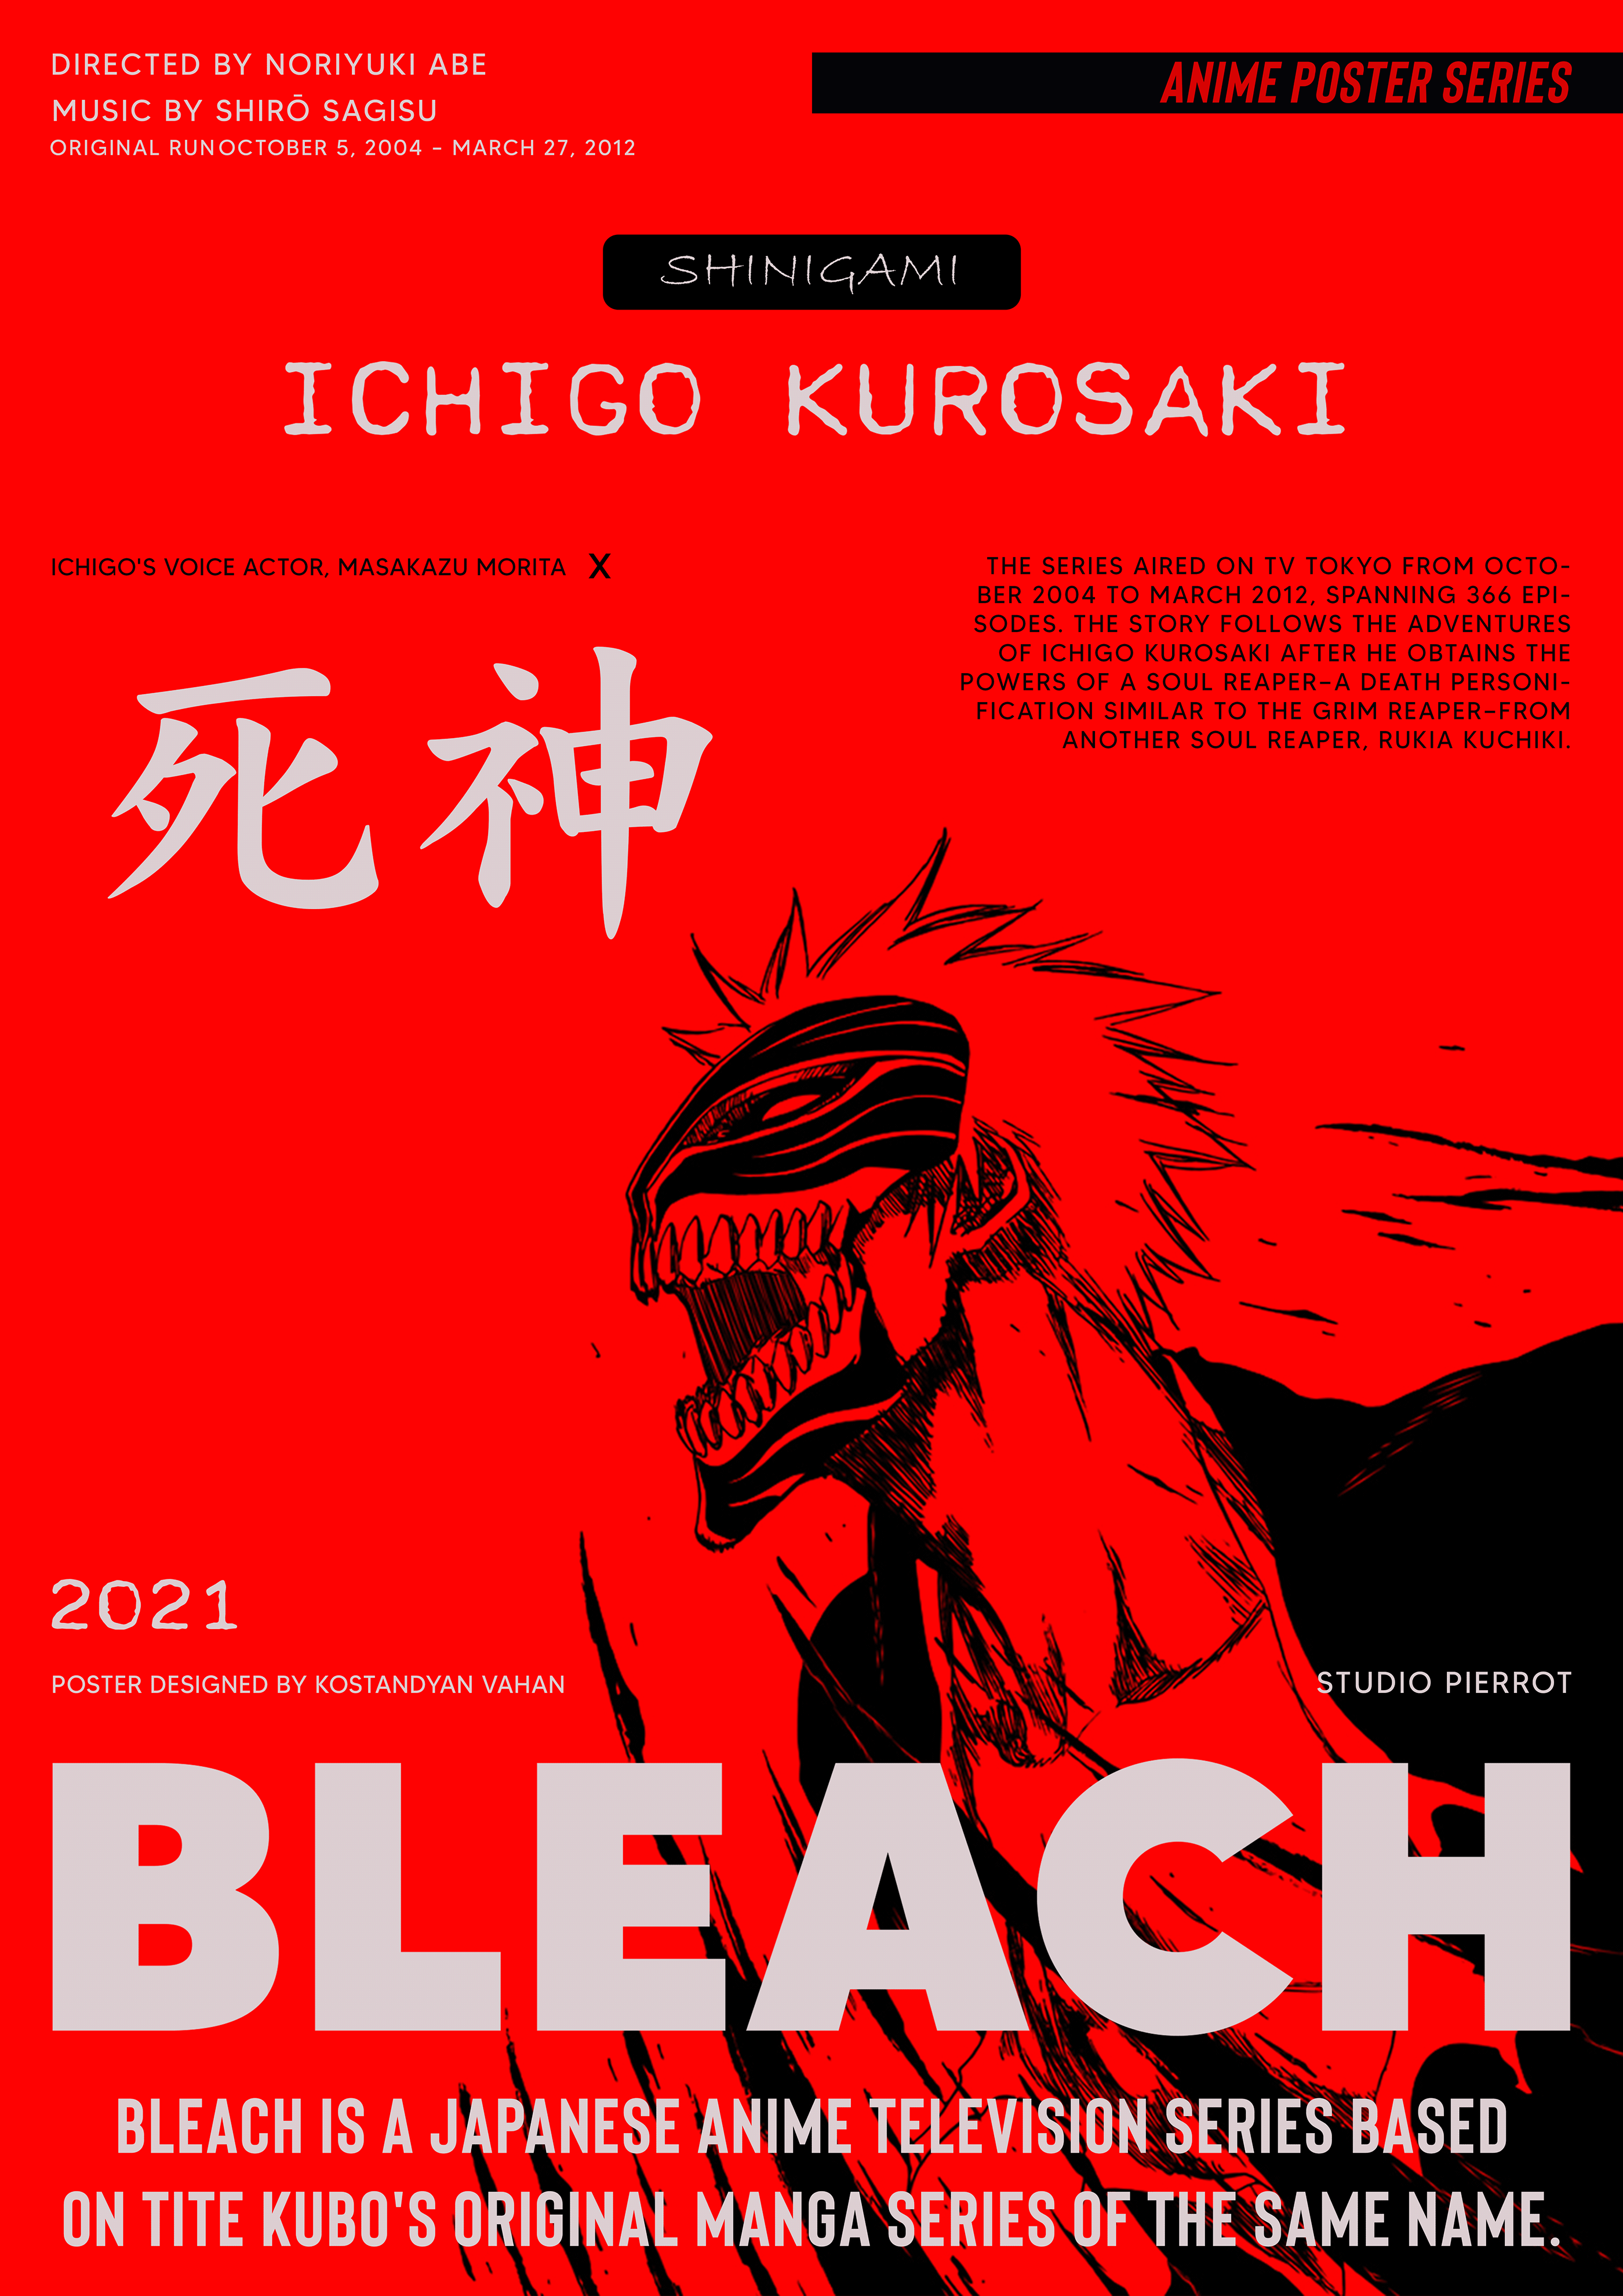 Anime poster series on Behance